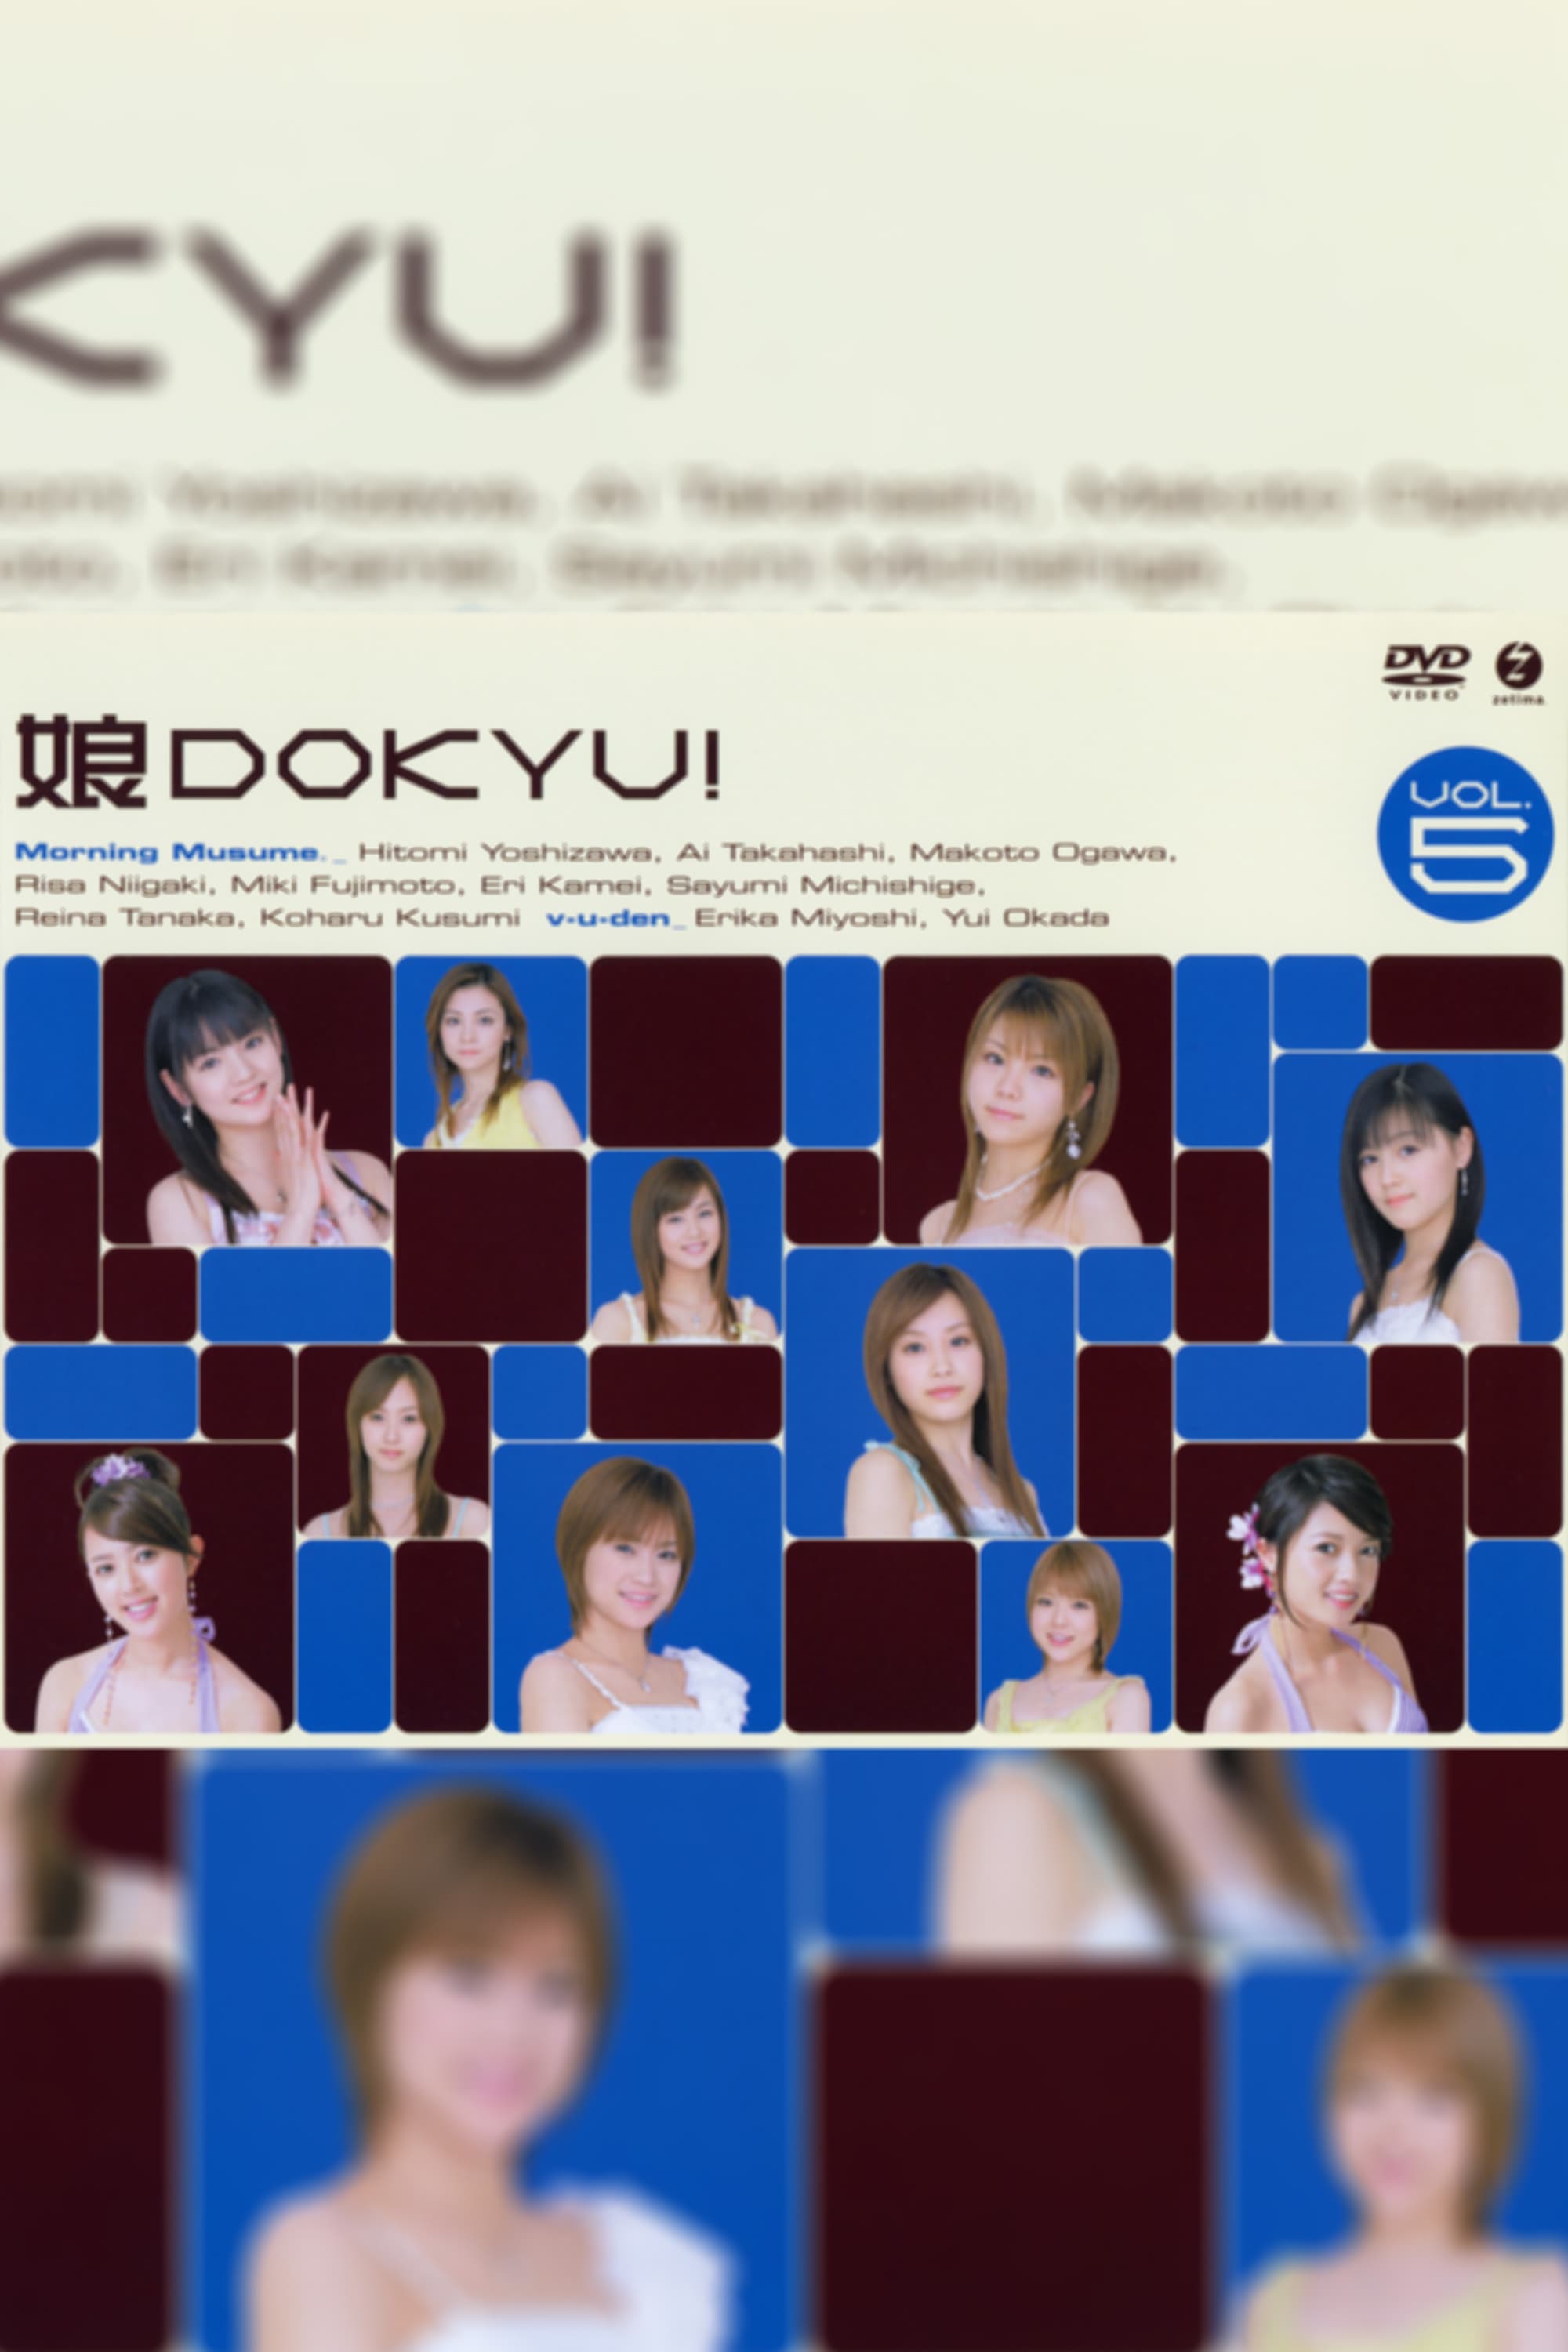 Musume. DOKYU! Vol.5